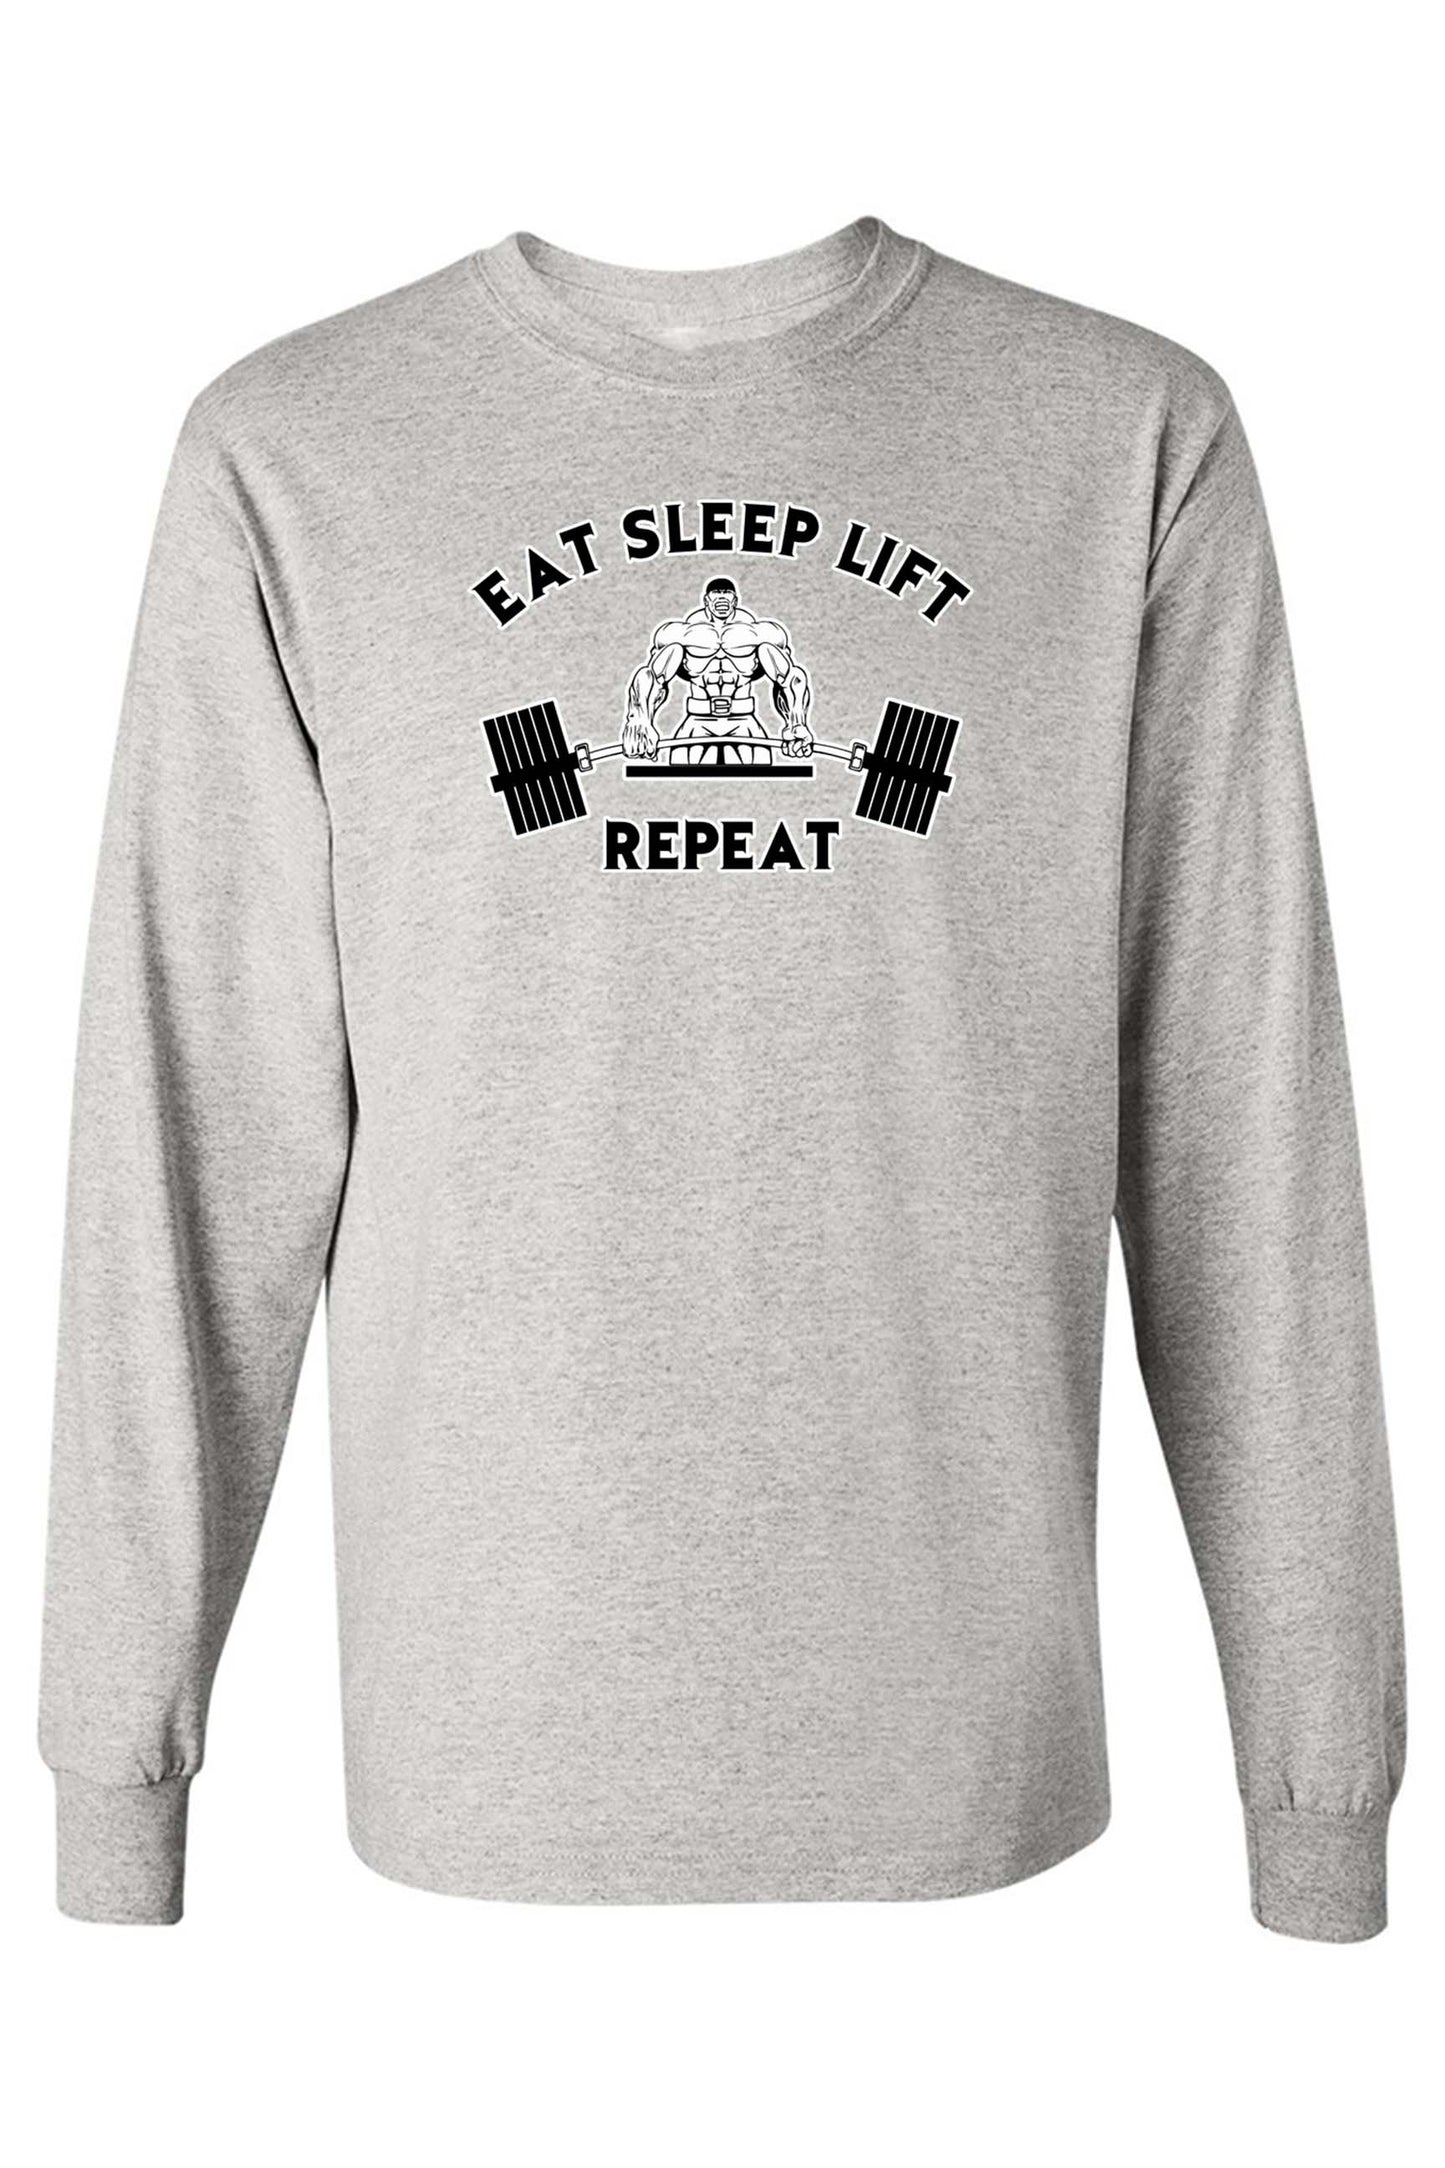 Unisex Eat Sleep Lift Workout Fitness Humor Long Sleeve shirt